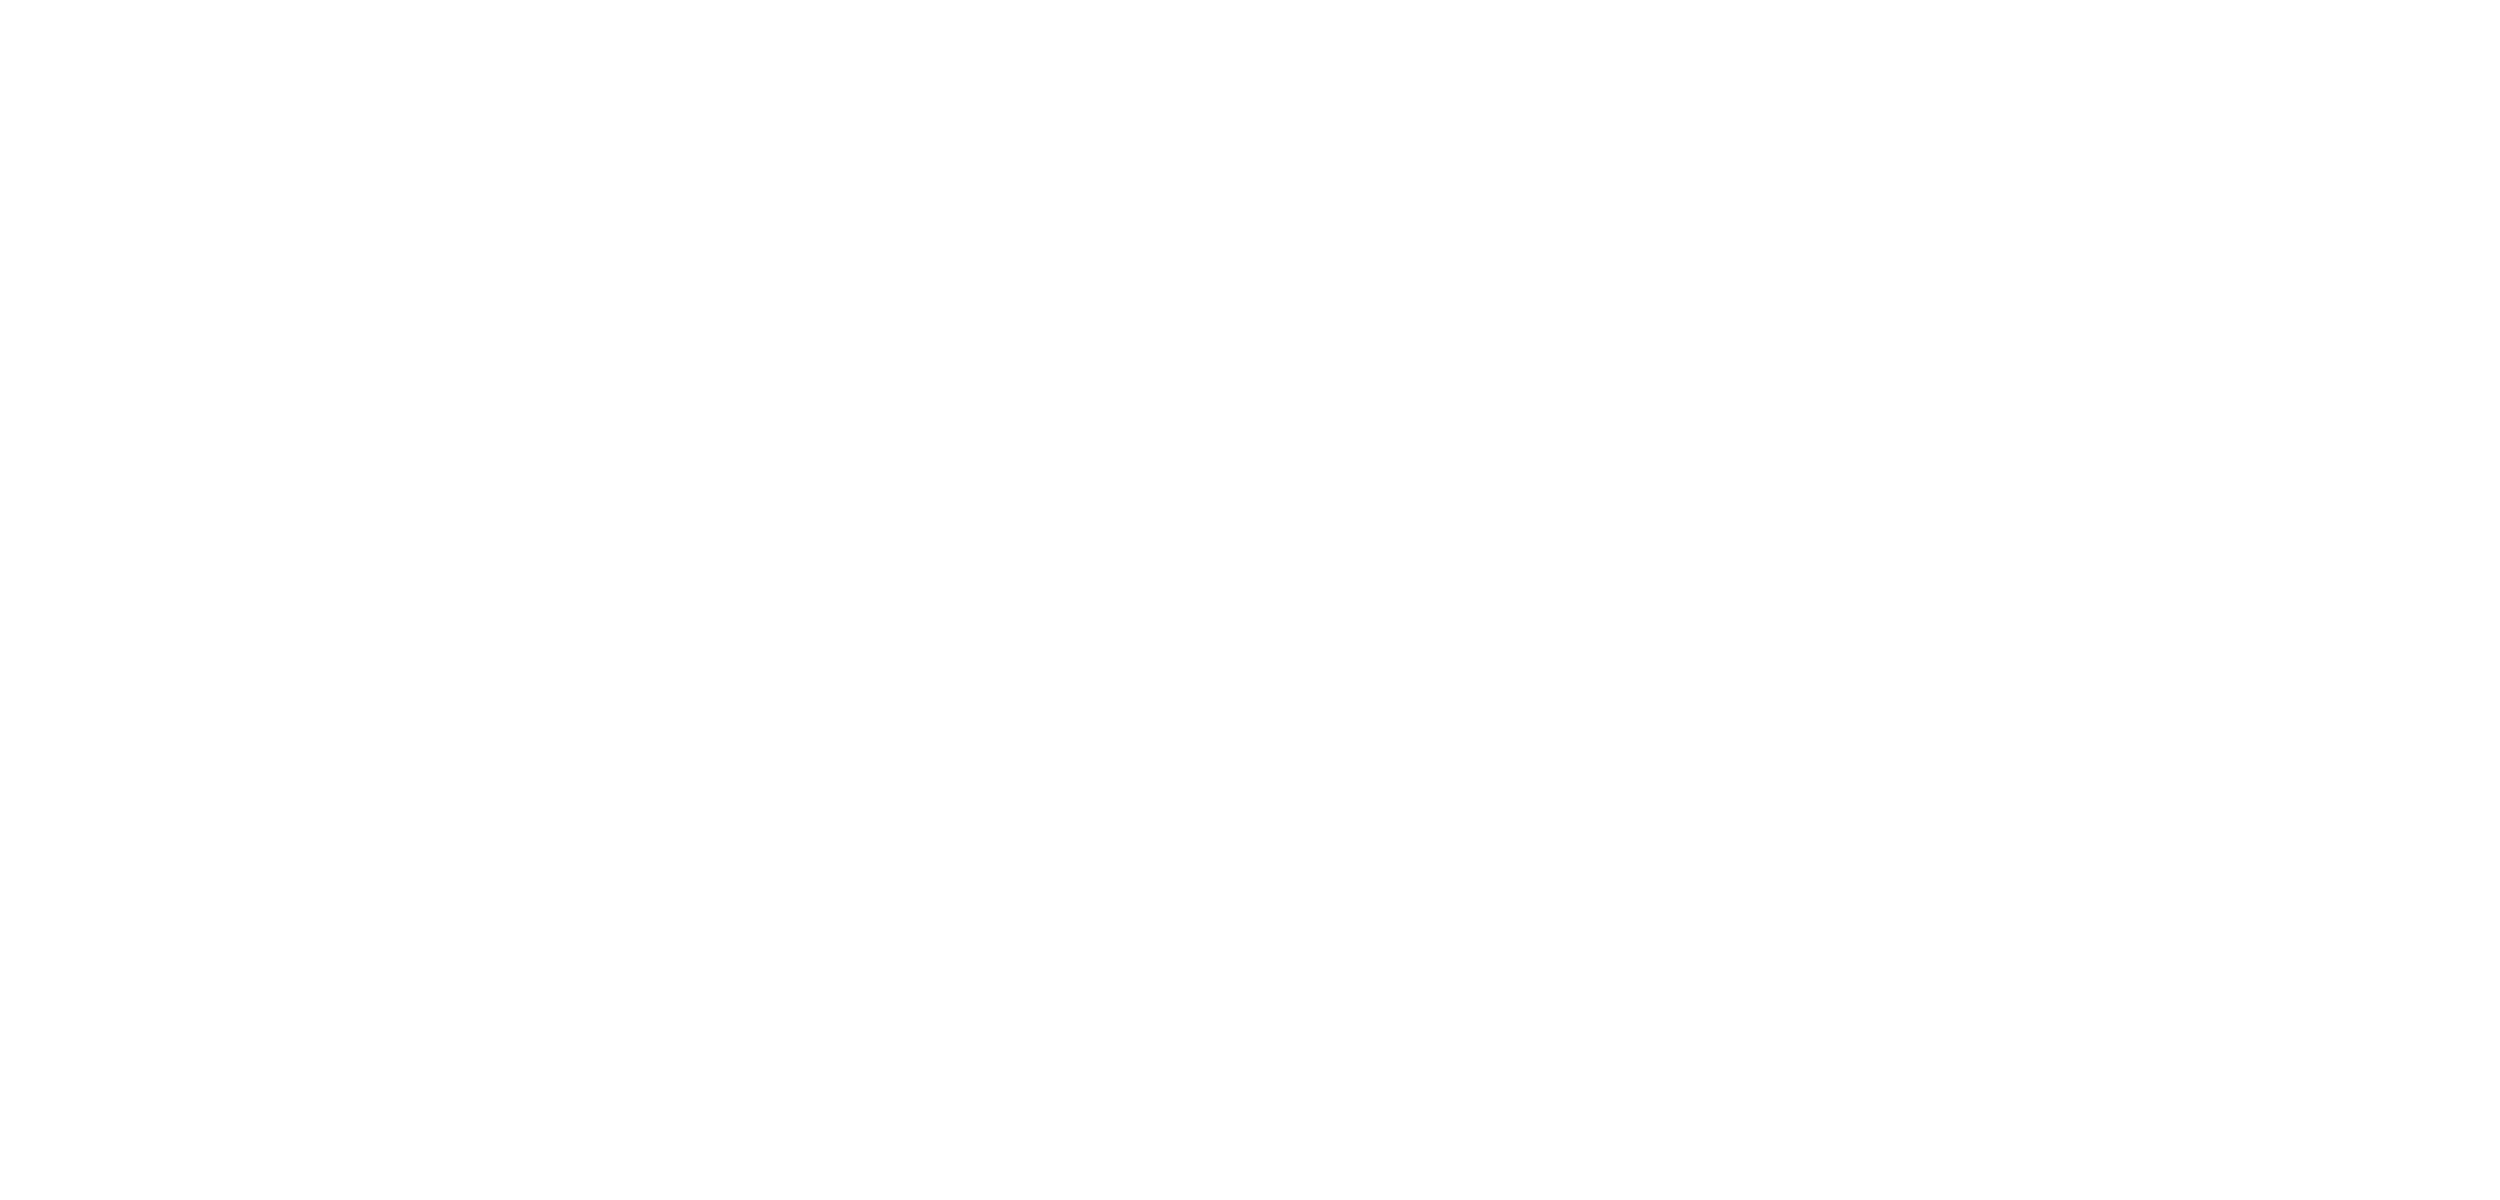 AbbottVision